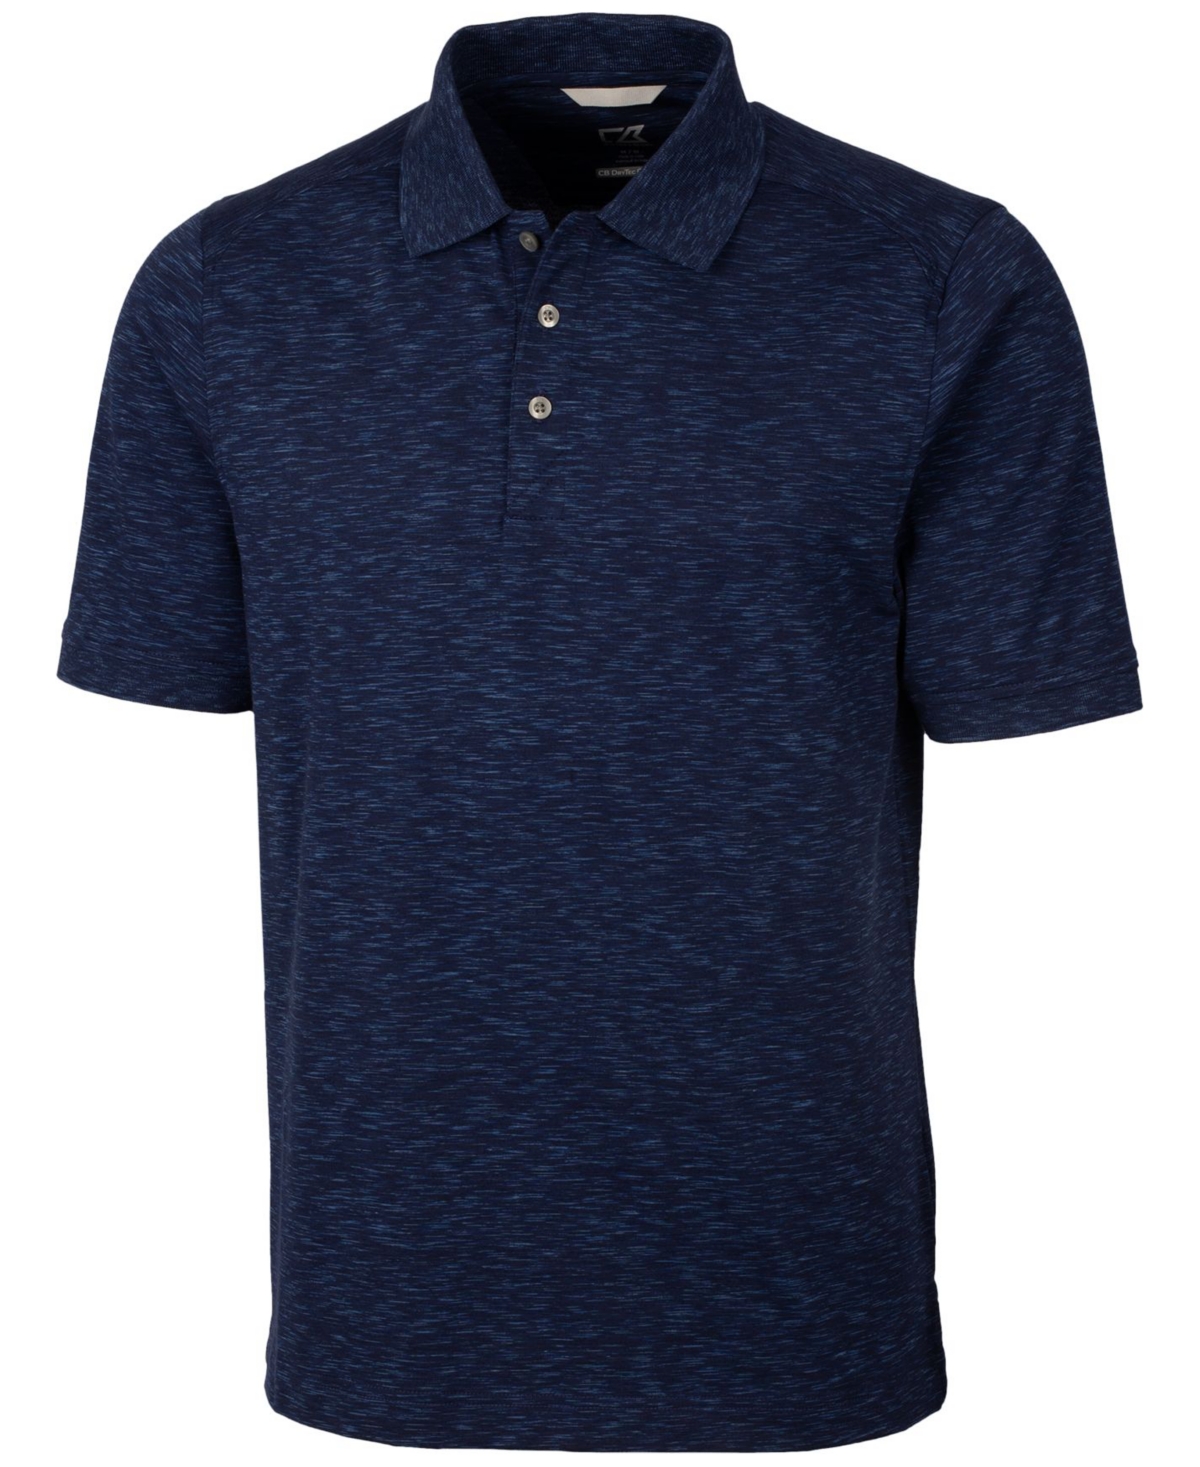 Advantage Tri-Blend Space Dye Men's Big and Tall Polo Shirt - Open Blue